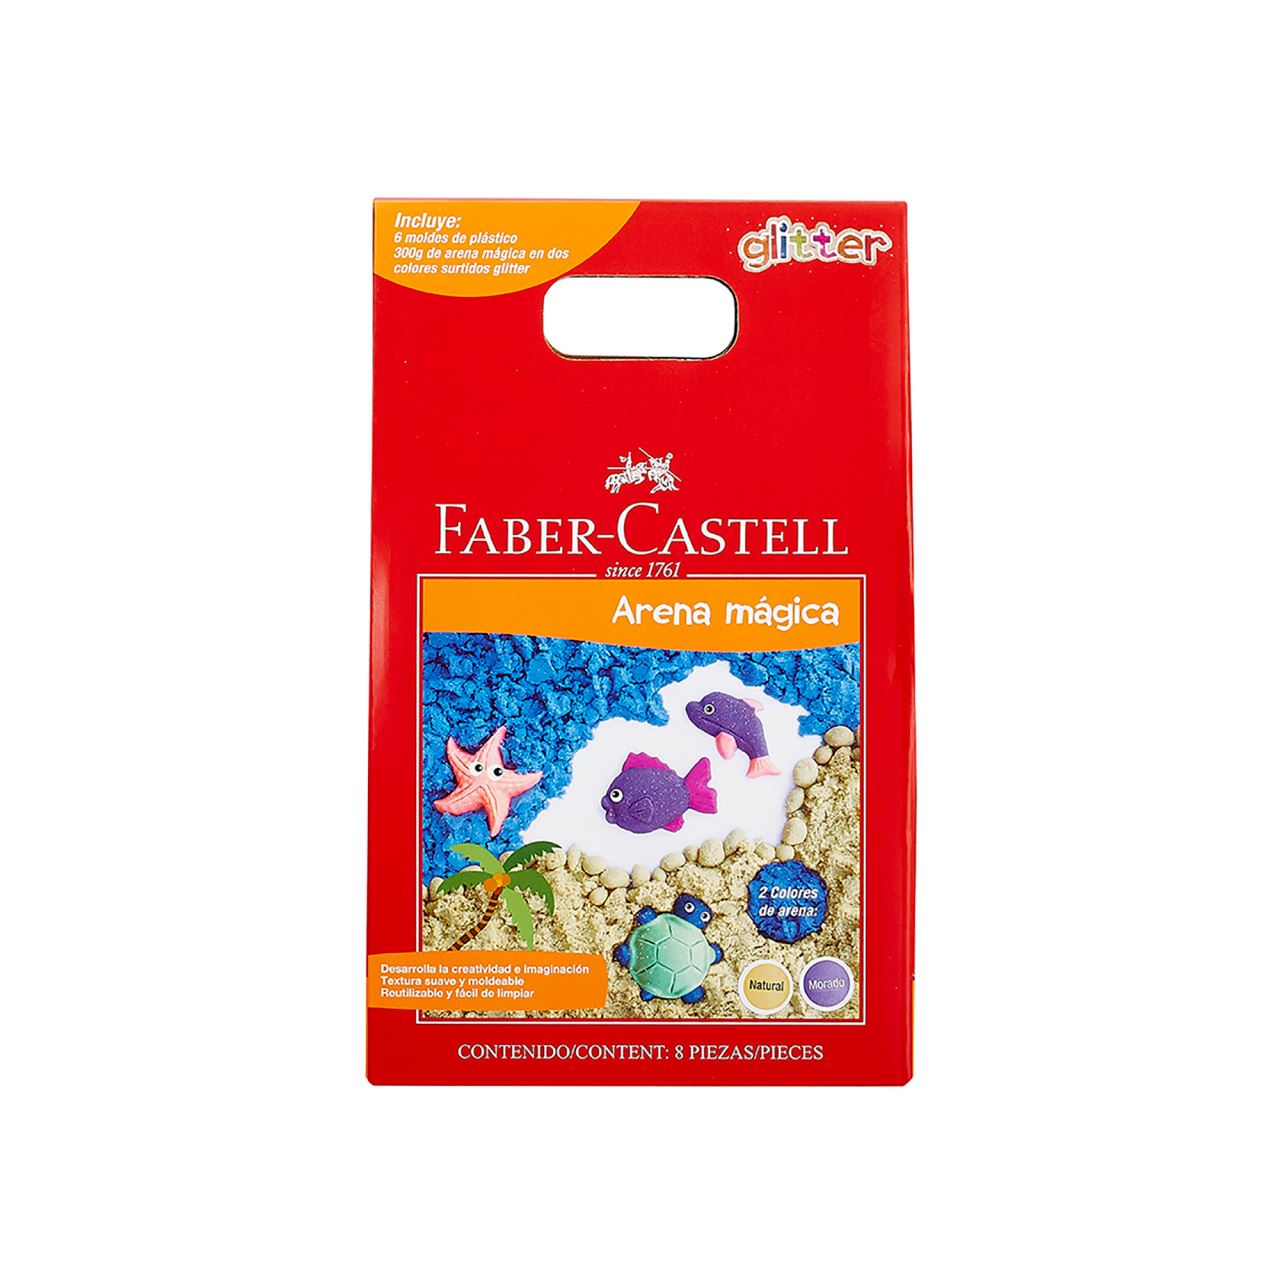 Faber-Castell - Arena mágica glitter 300g + 6 moldes